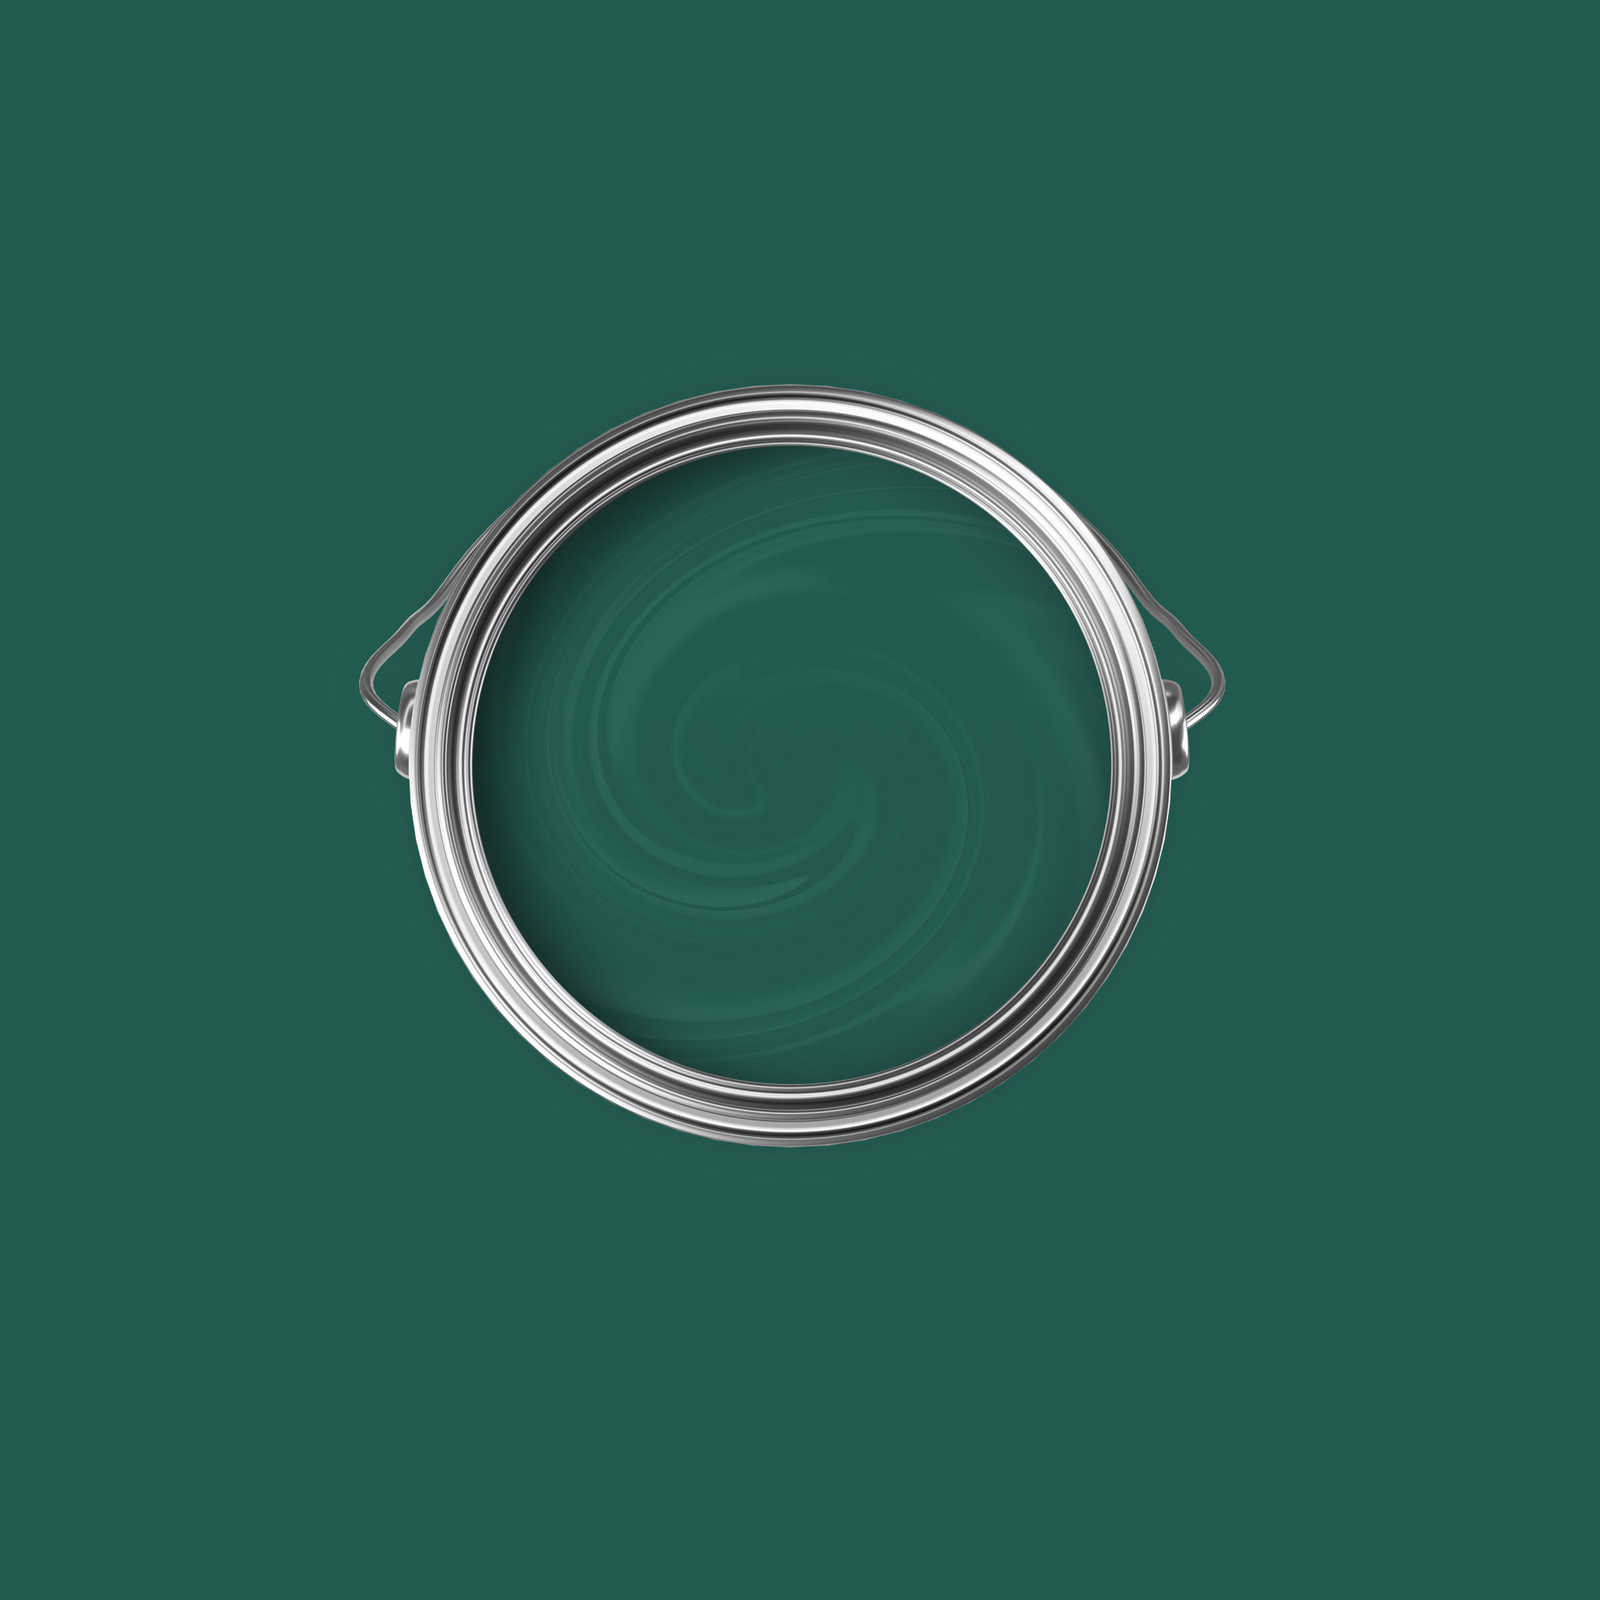             Premium Muurverf prachtig smaragdgroen »Expressive Emerald« NW412 – 2,5 liter
        